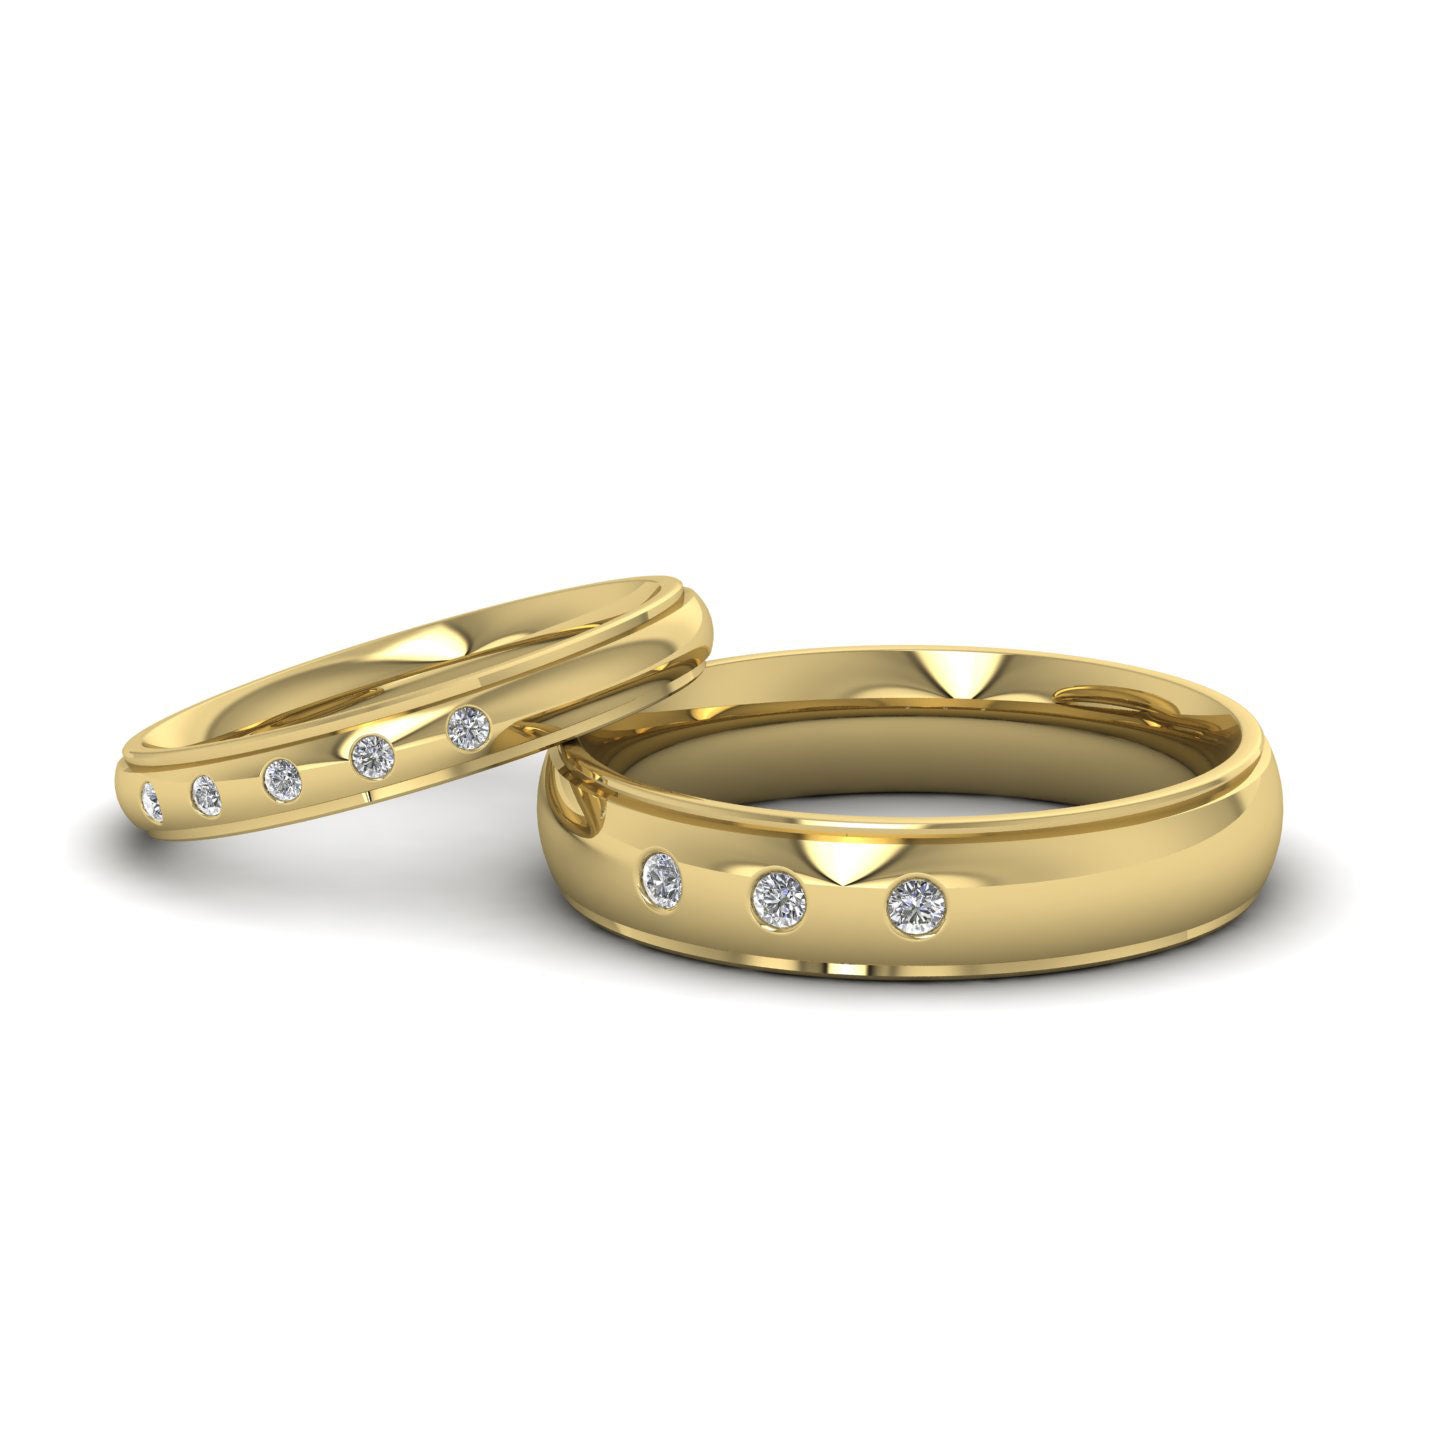 Line Pattern And Three Diamond Set 22ct Yellow Gold 5mm Wedding Ring